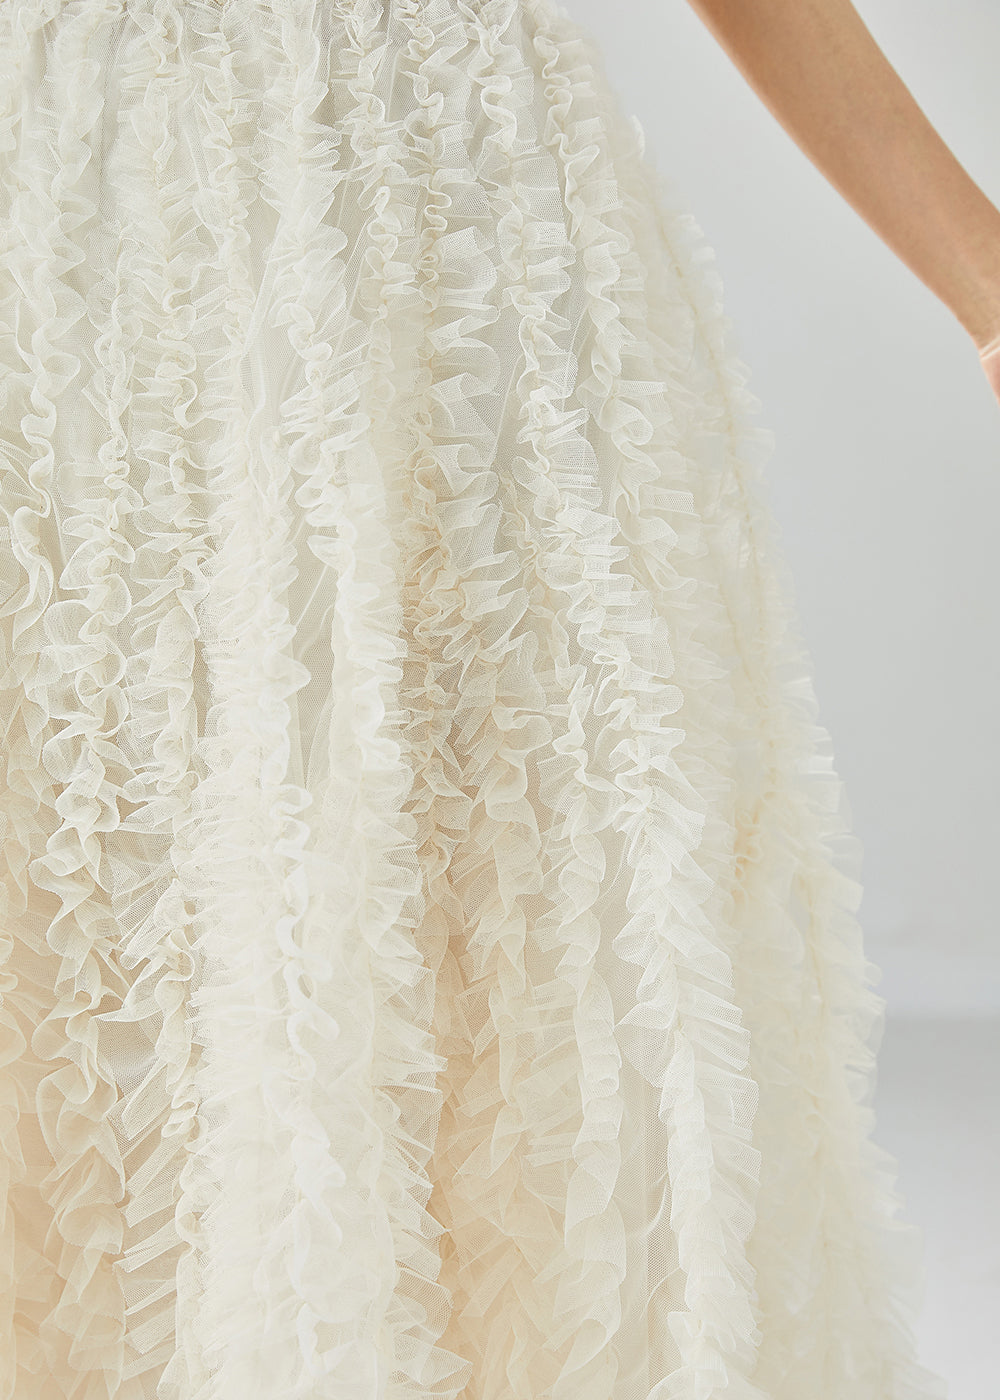 Fine White Ruffled Exra Large Hem Tulle A Line Skirt Summer LY6129 - fabuloryshop